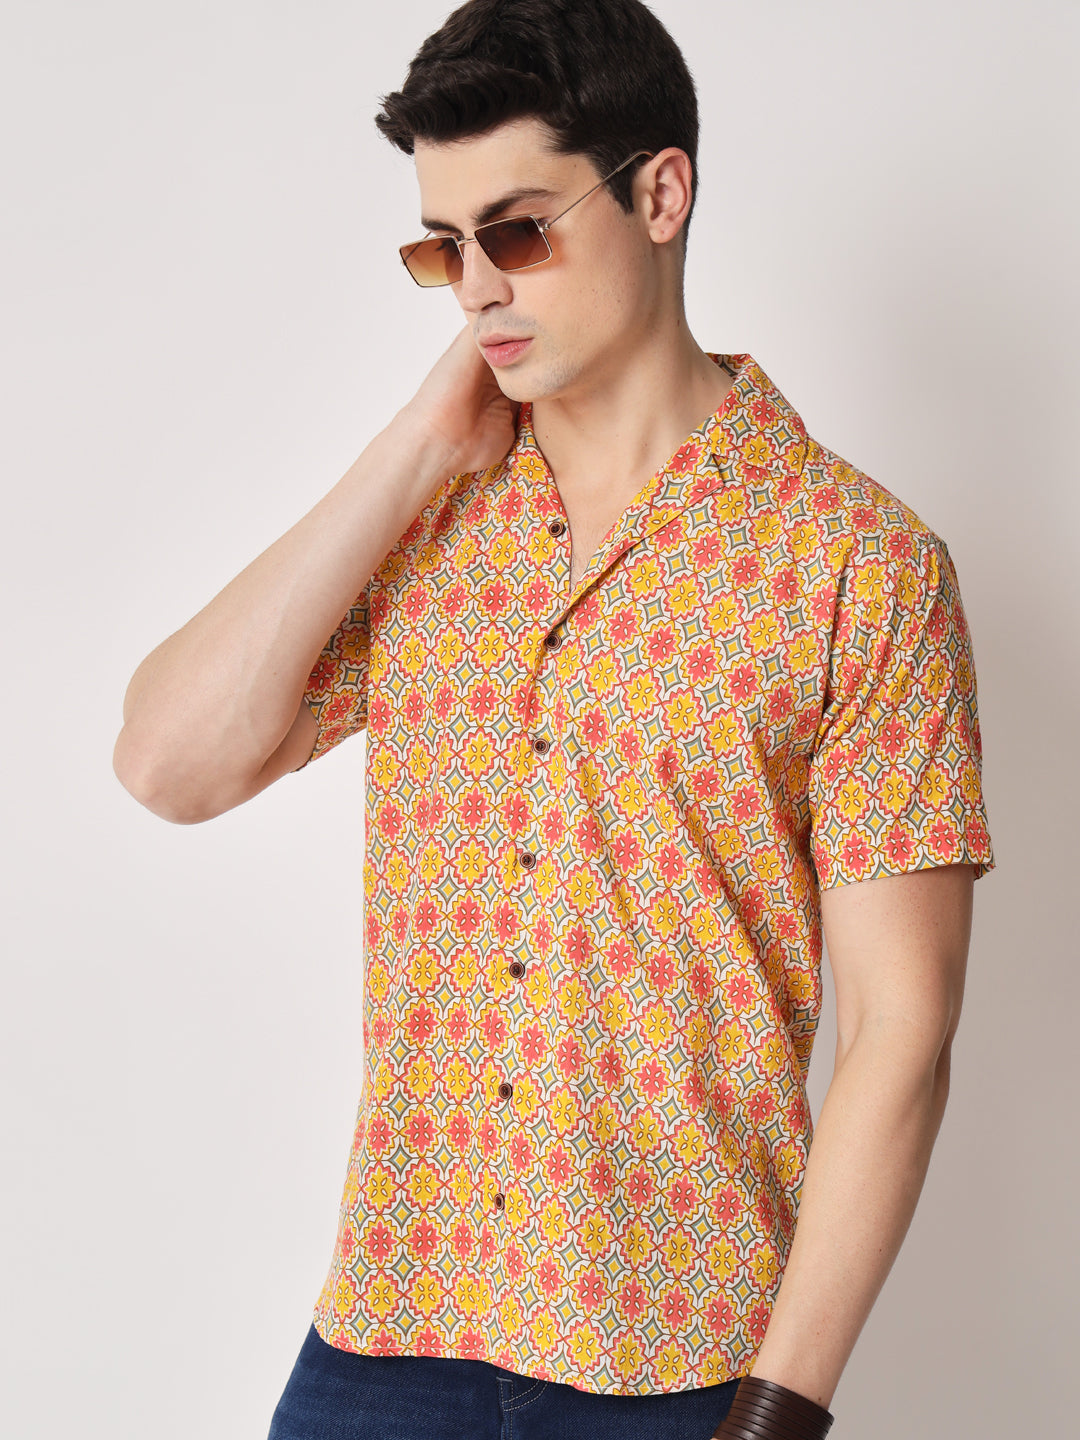 Firangi Yarn 100% Jaipuri Cotton Resort Cuban Collar Casual Shirt Multi-Color/Yellow